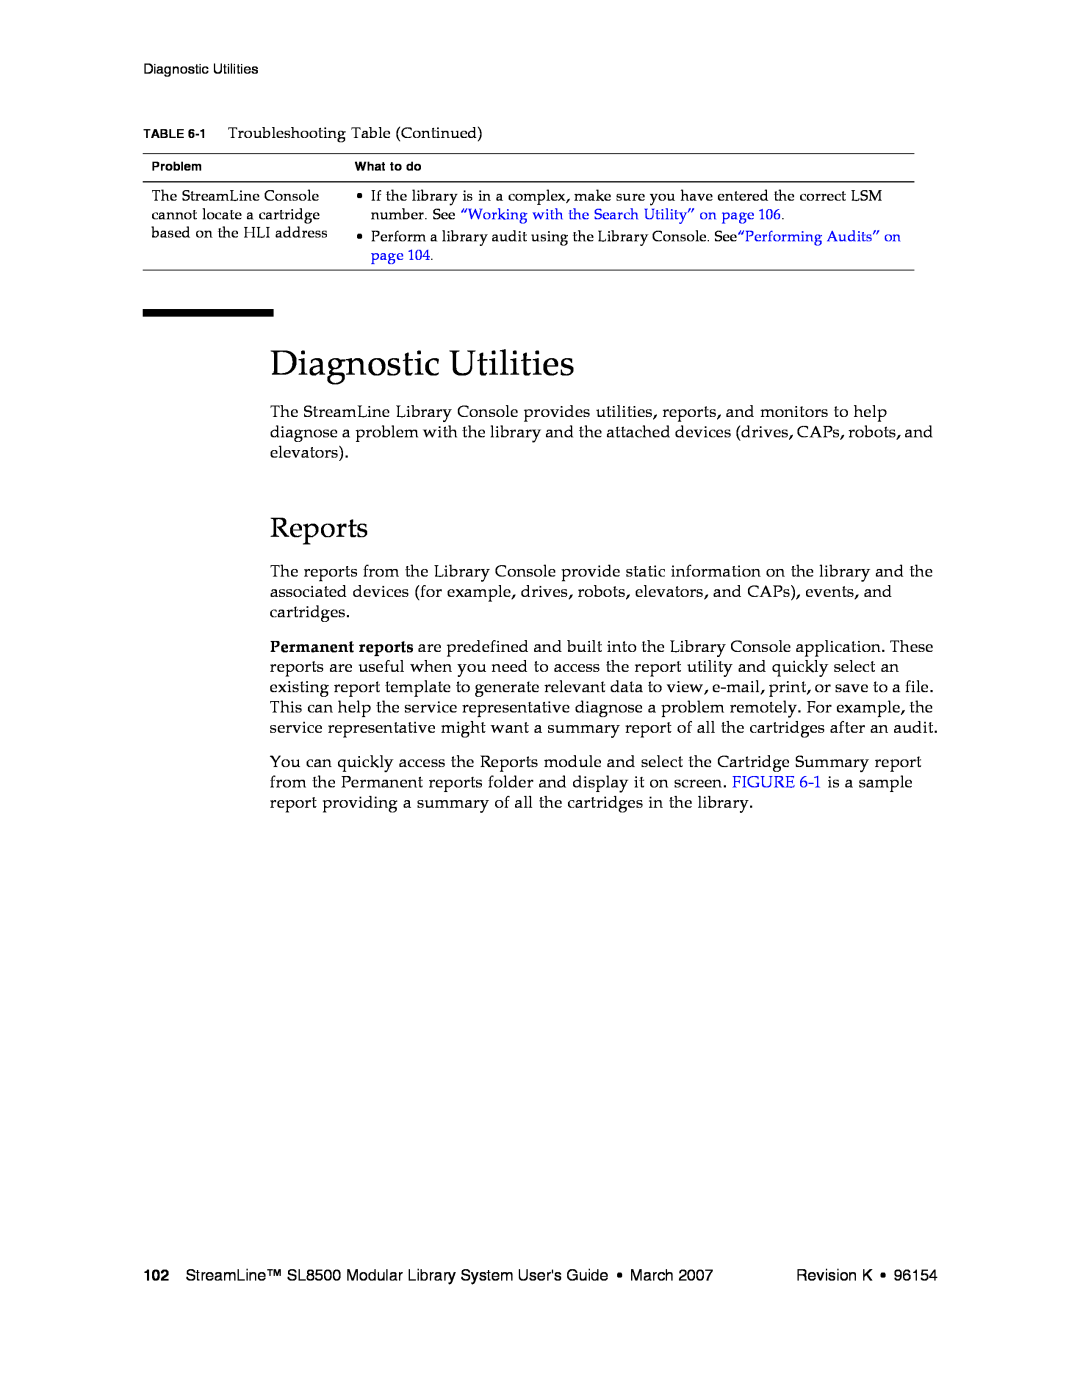 Sun Microsystems SL8500 manual Diagnostic Utilities, Reports 